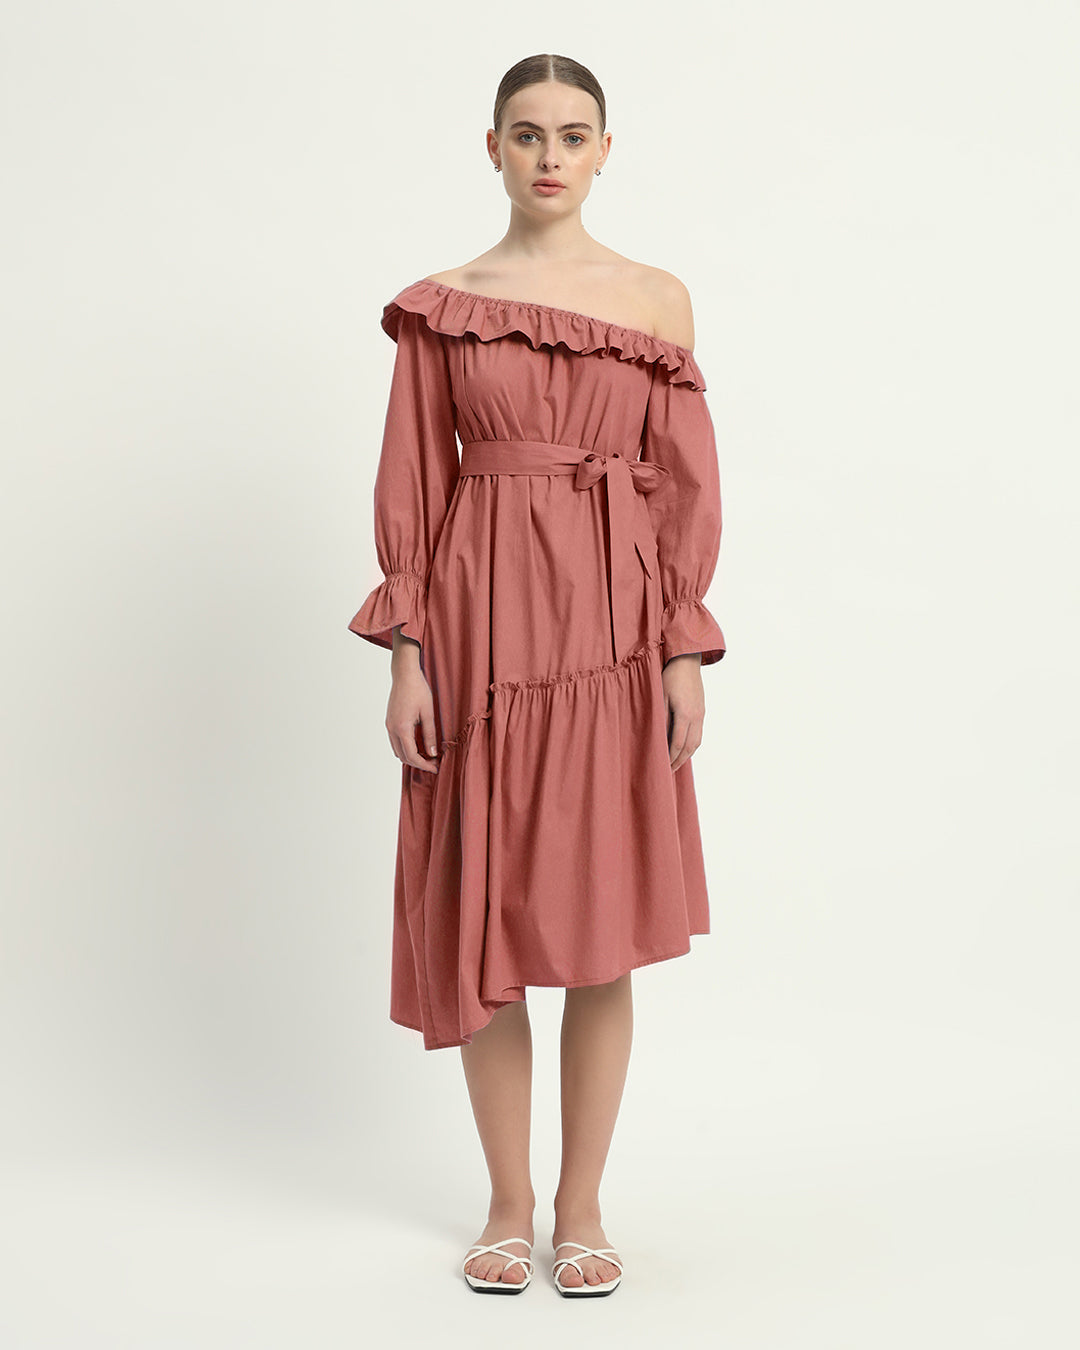 The Ivory Pink Stellata Cotton Dress